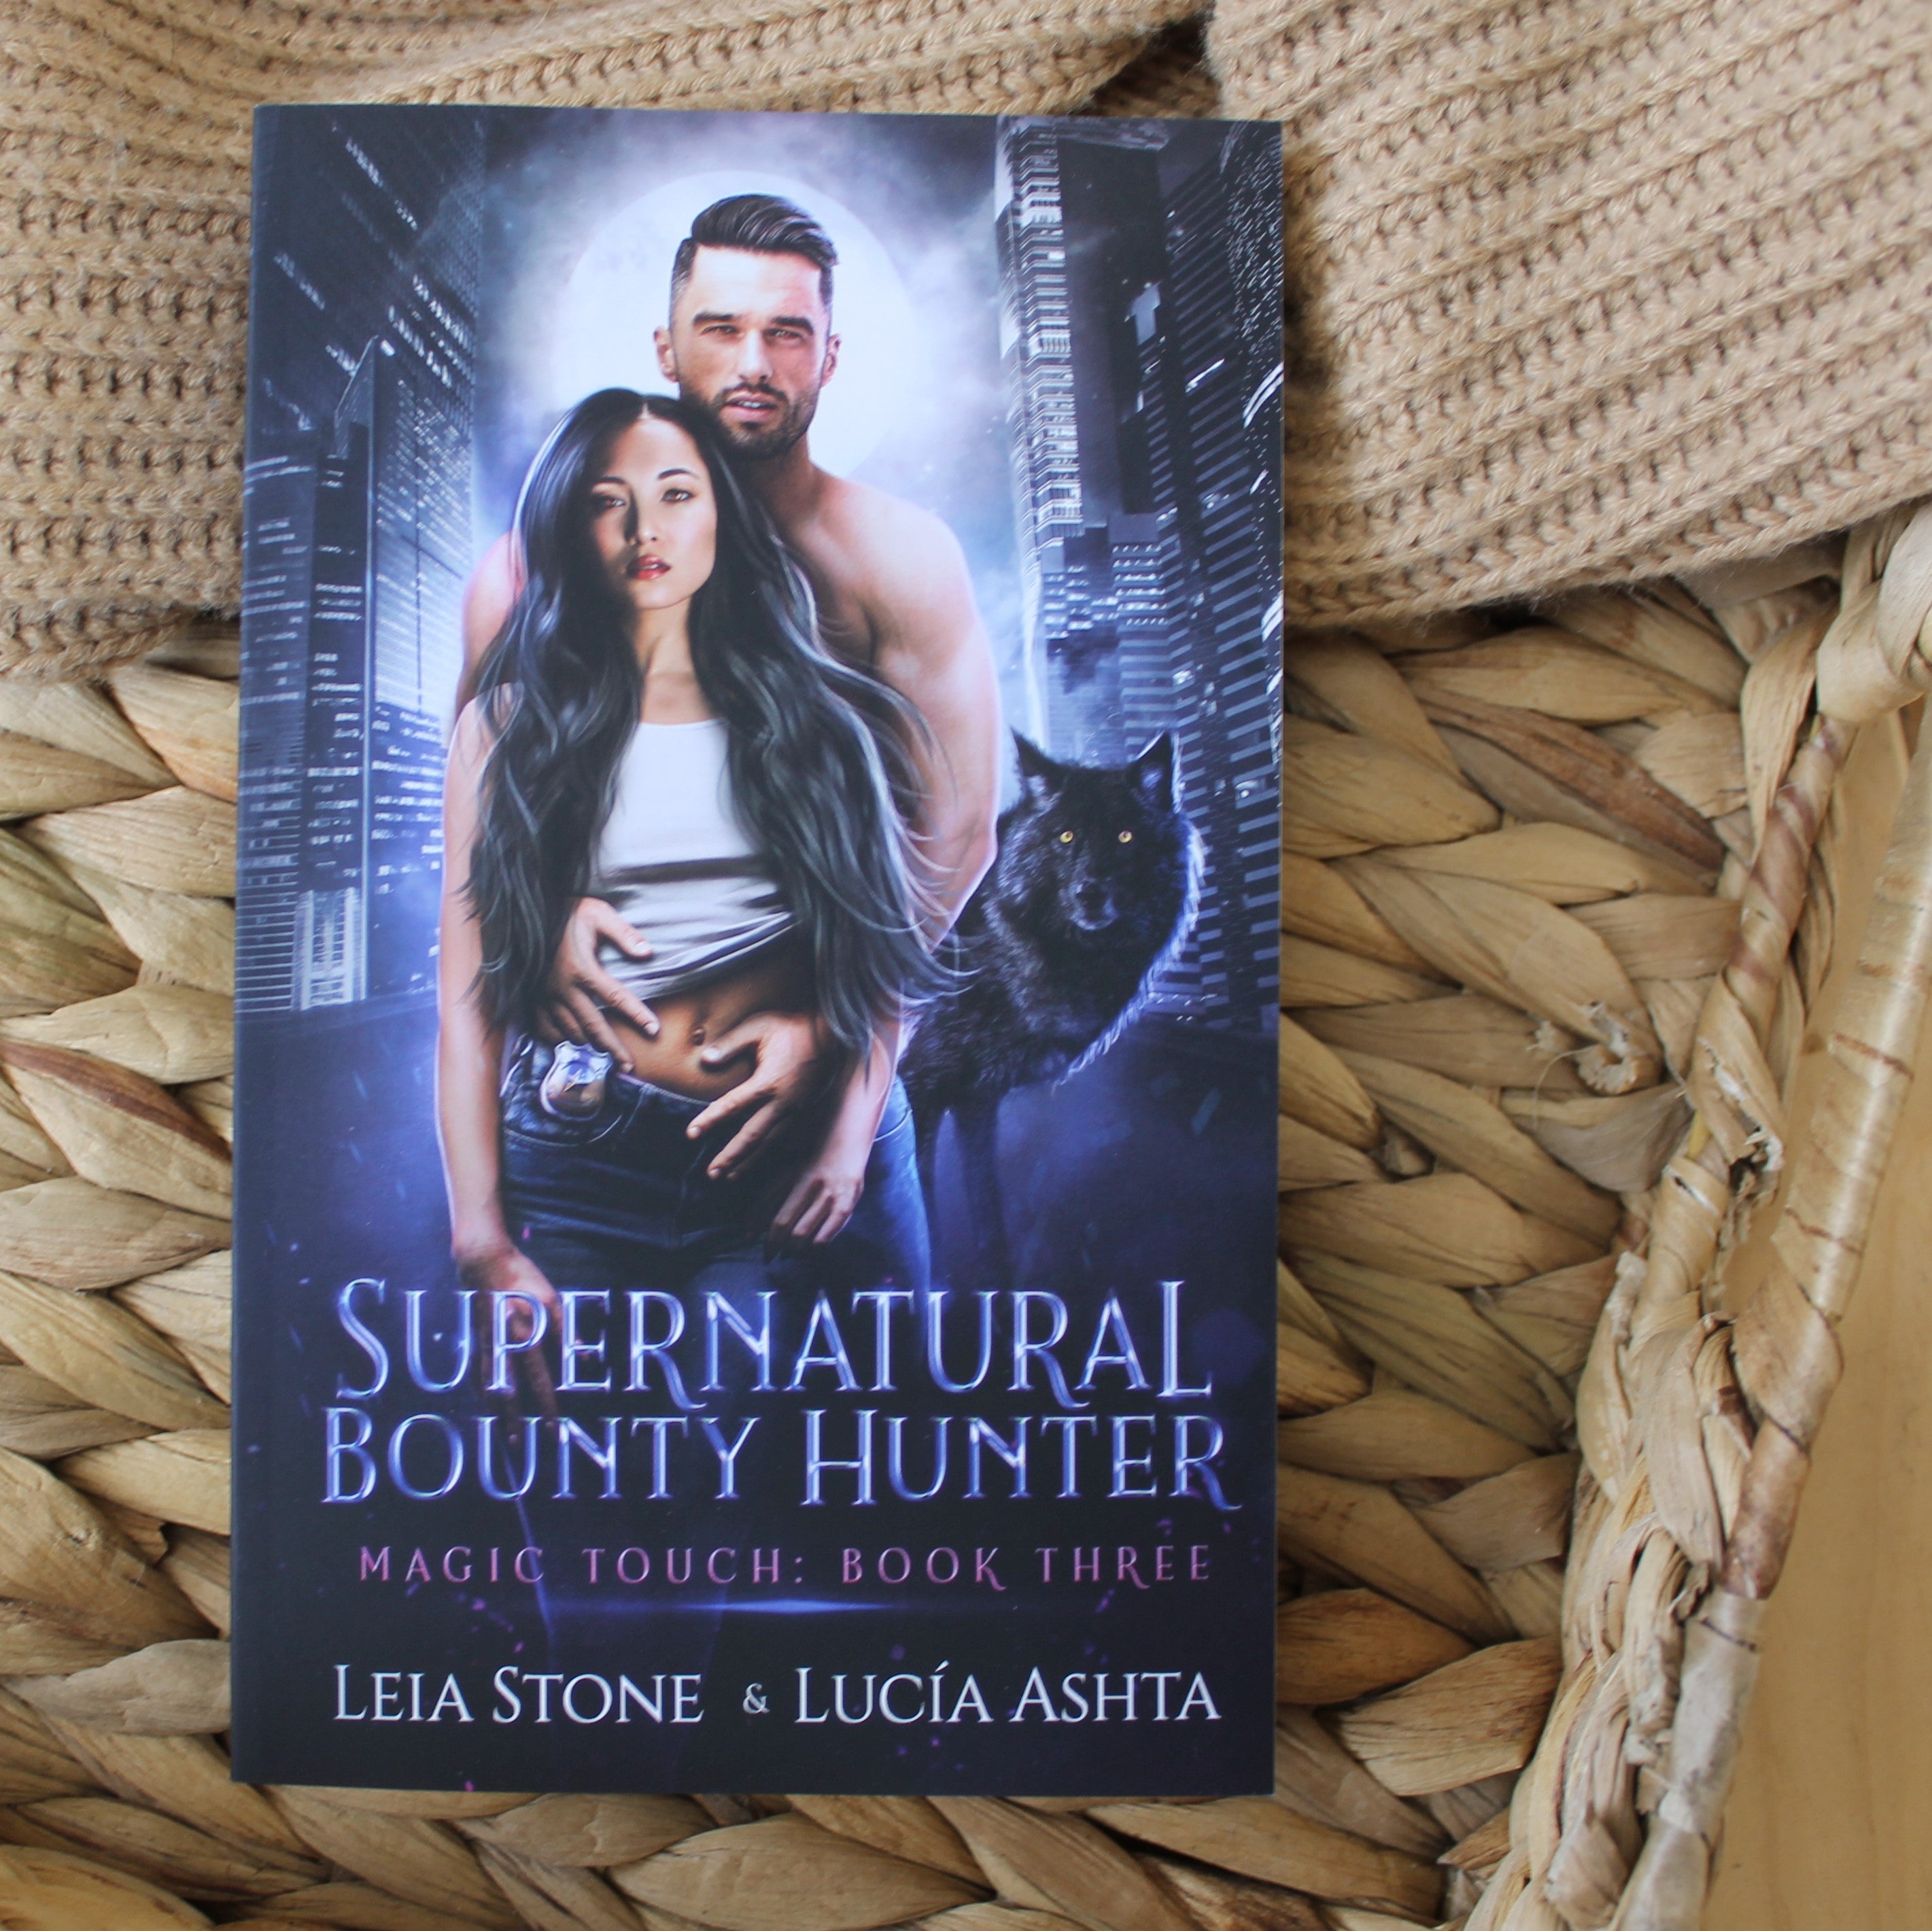 Supernatural Bounty Hunter series by Leia Stone & Lucia Ashta